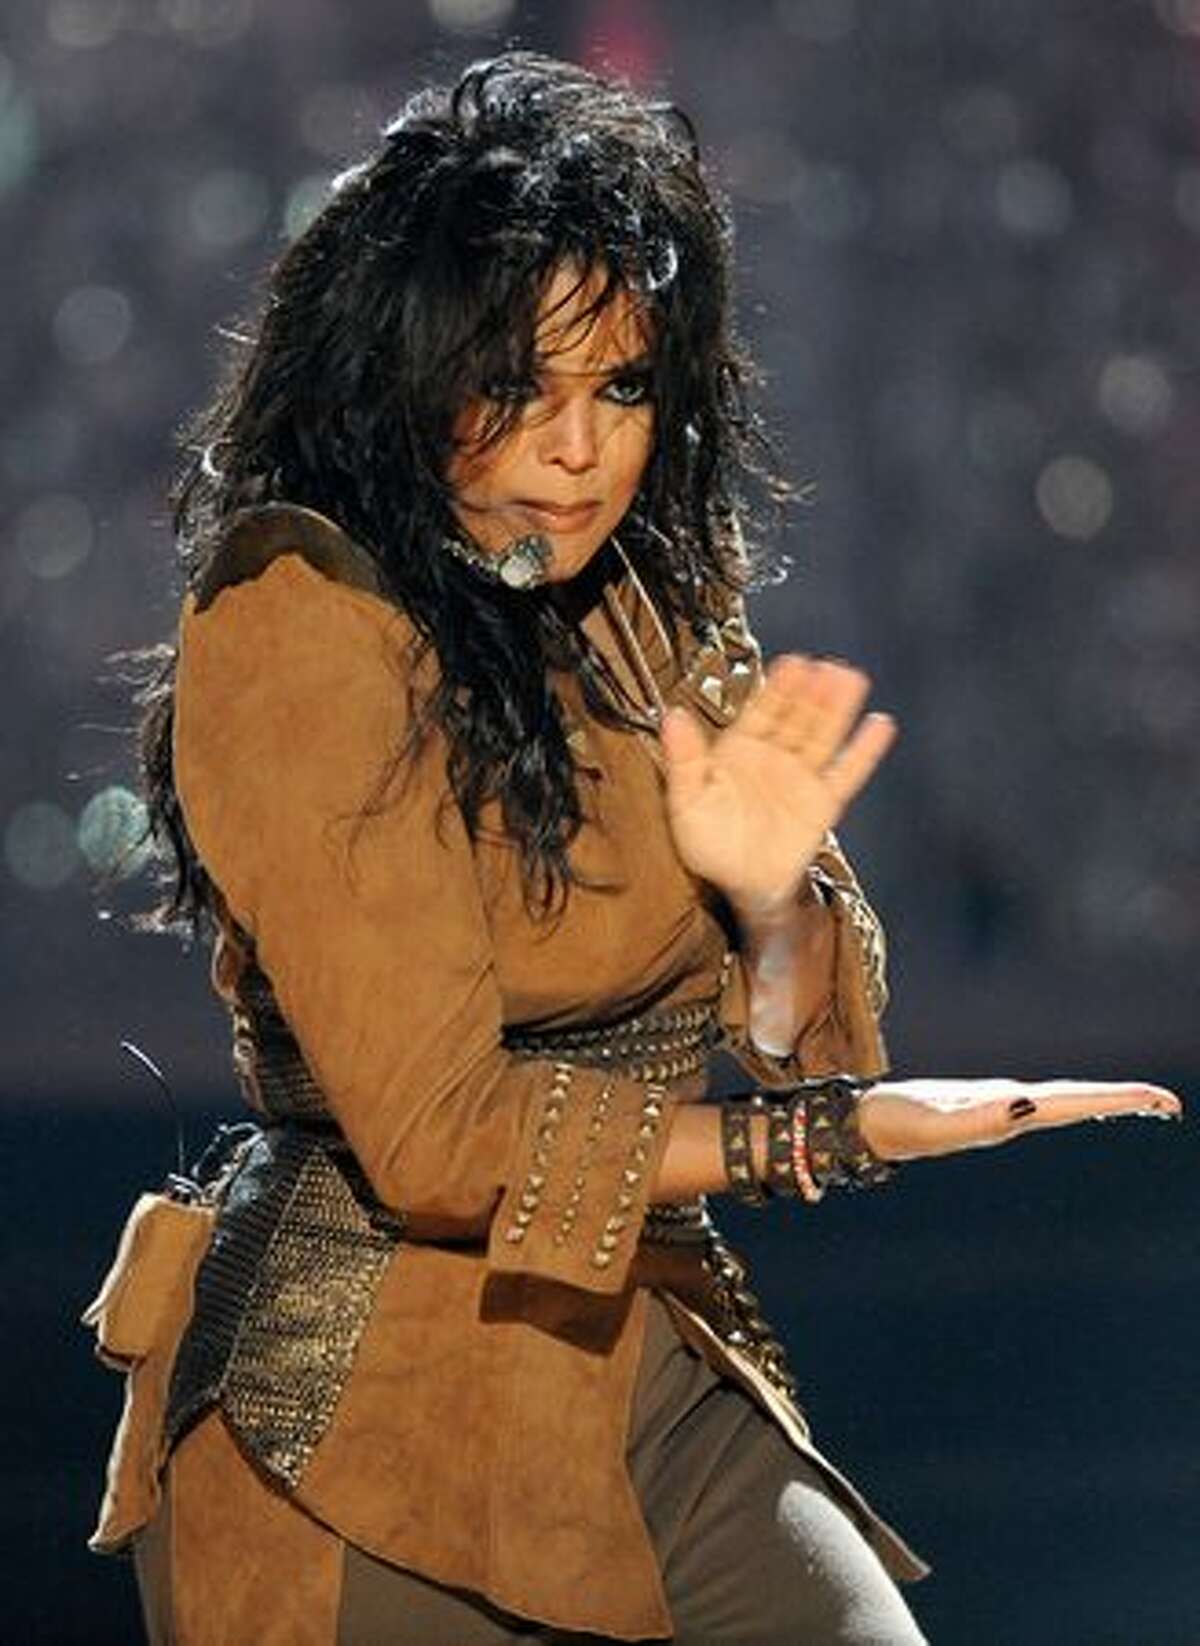 Singer Janet Jackson performs onstage.